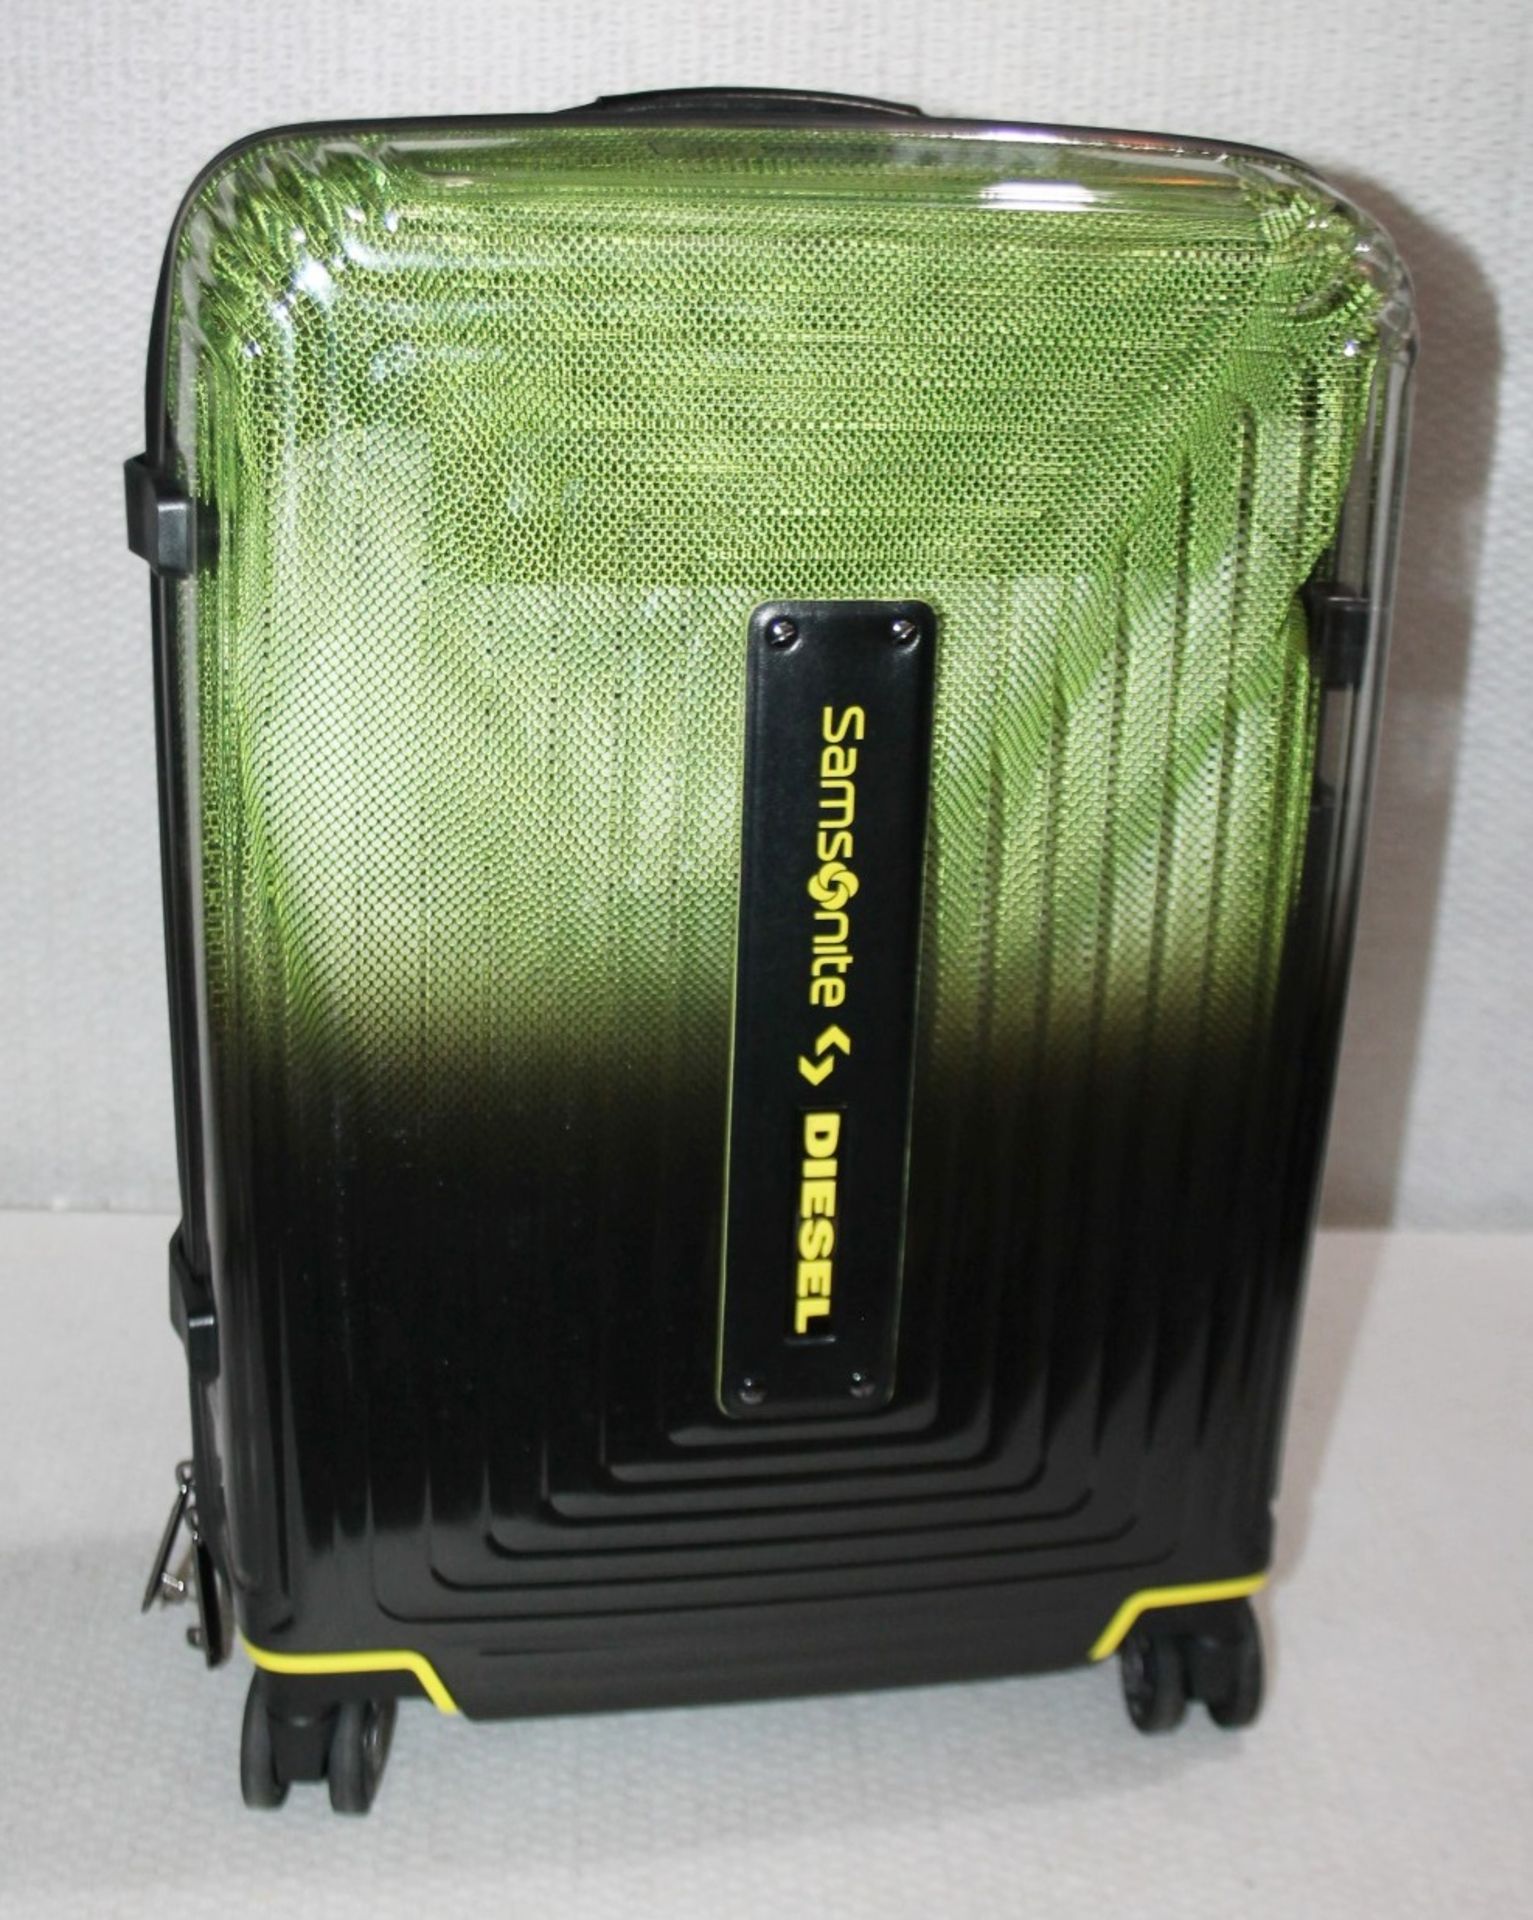 1 x SAMSONITE / DIESEL 'Neopulse' Polycarbonate Spinner Suitcase (55cm) - Ex-Display With Tags - - Image 6 of 17